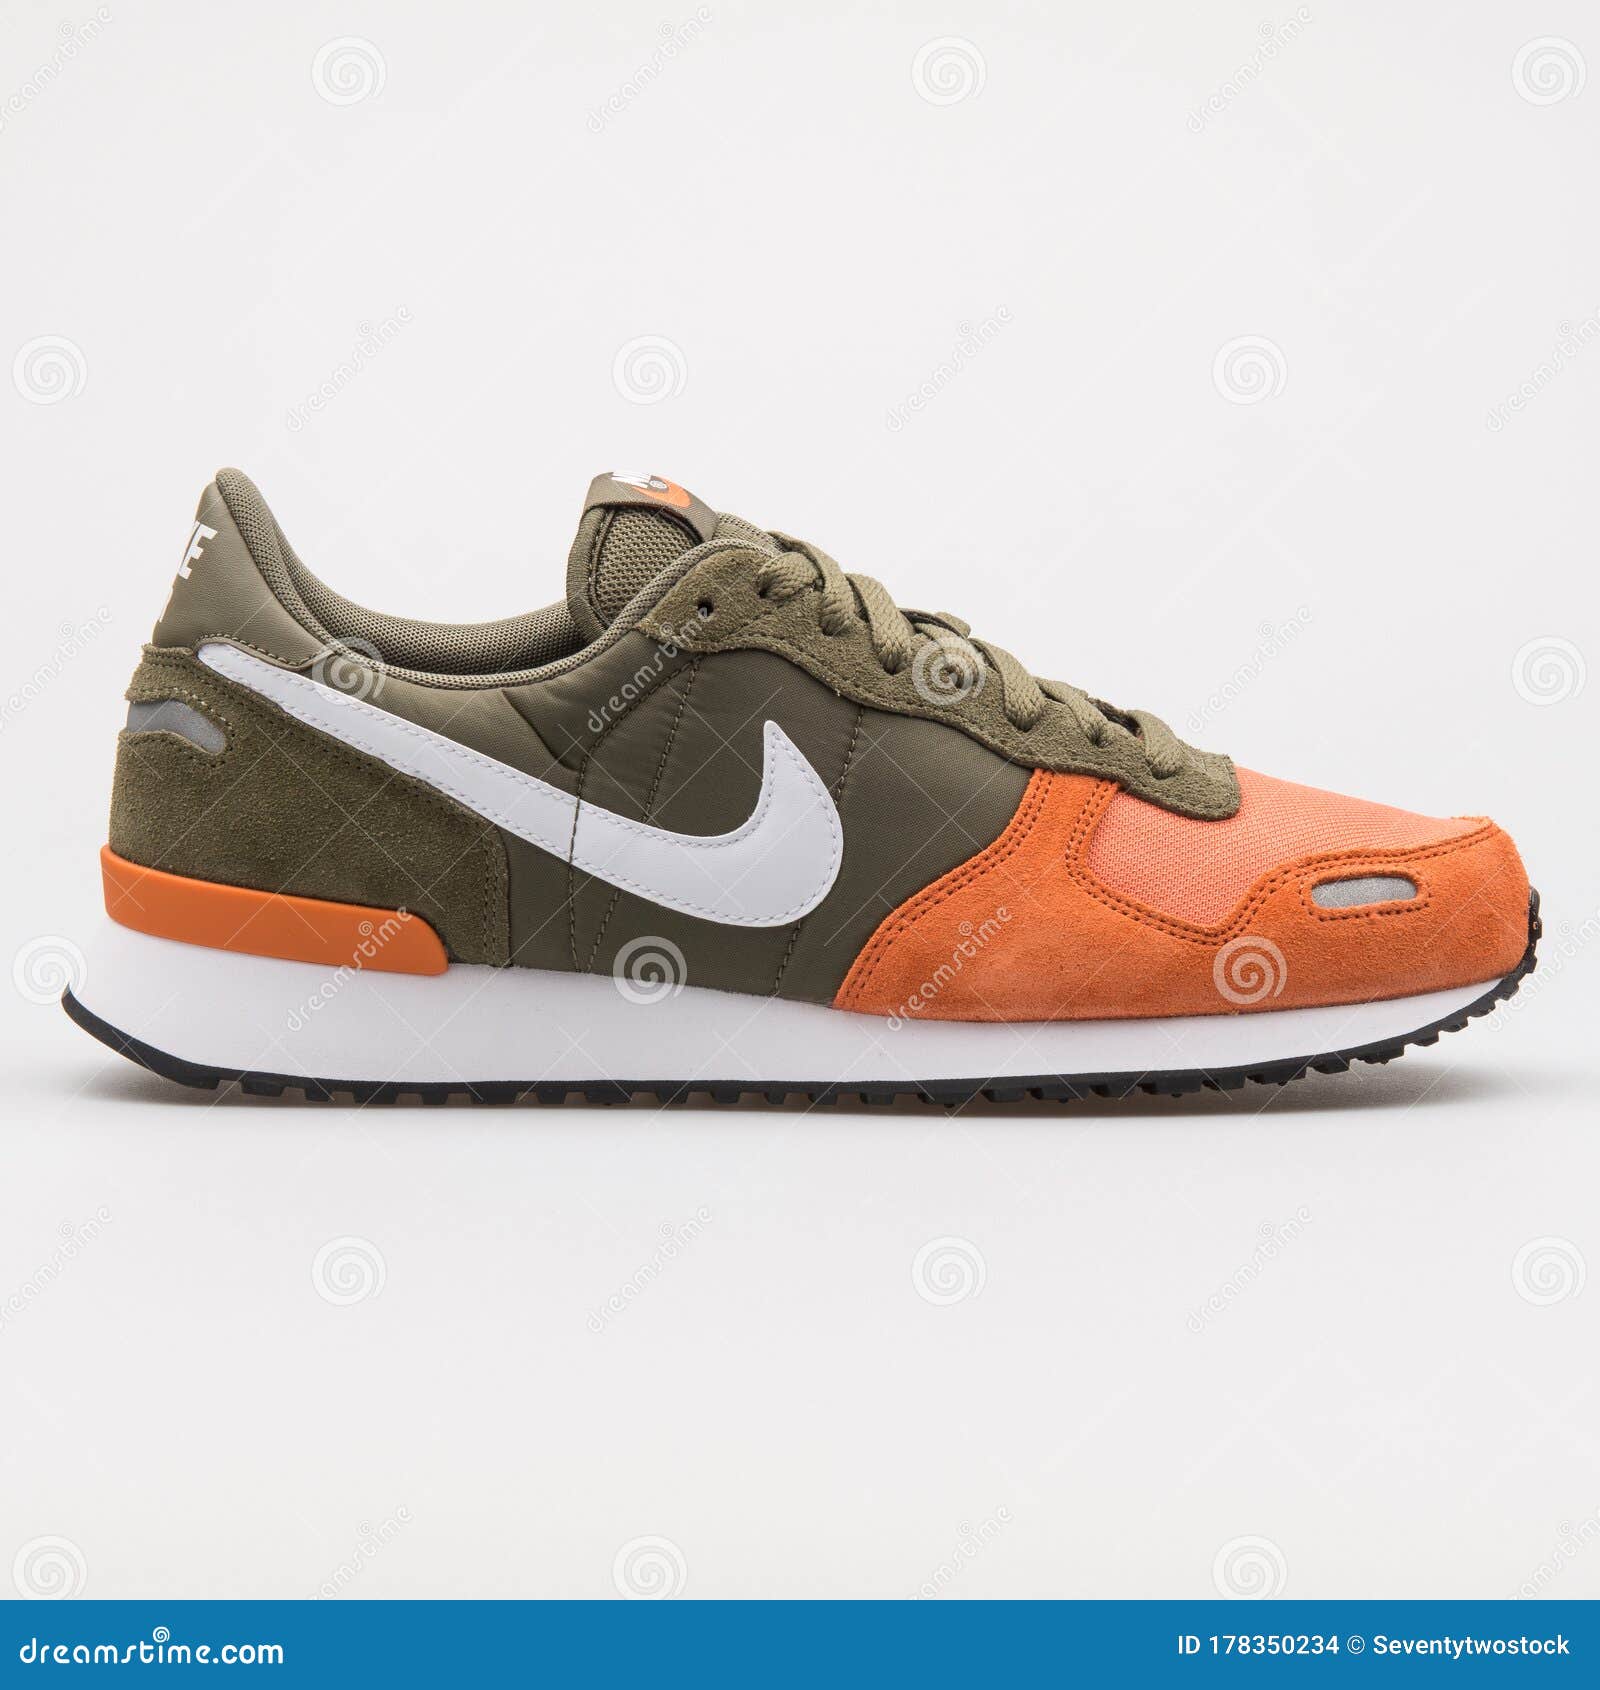 Nike VRTX Leather Olive Orange and White Sneaker Editorial Stock Image - Image of kicks, running: